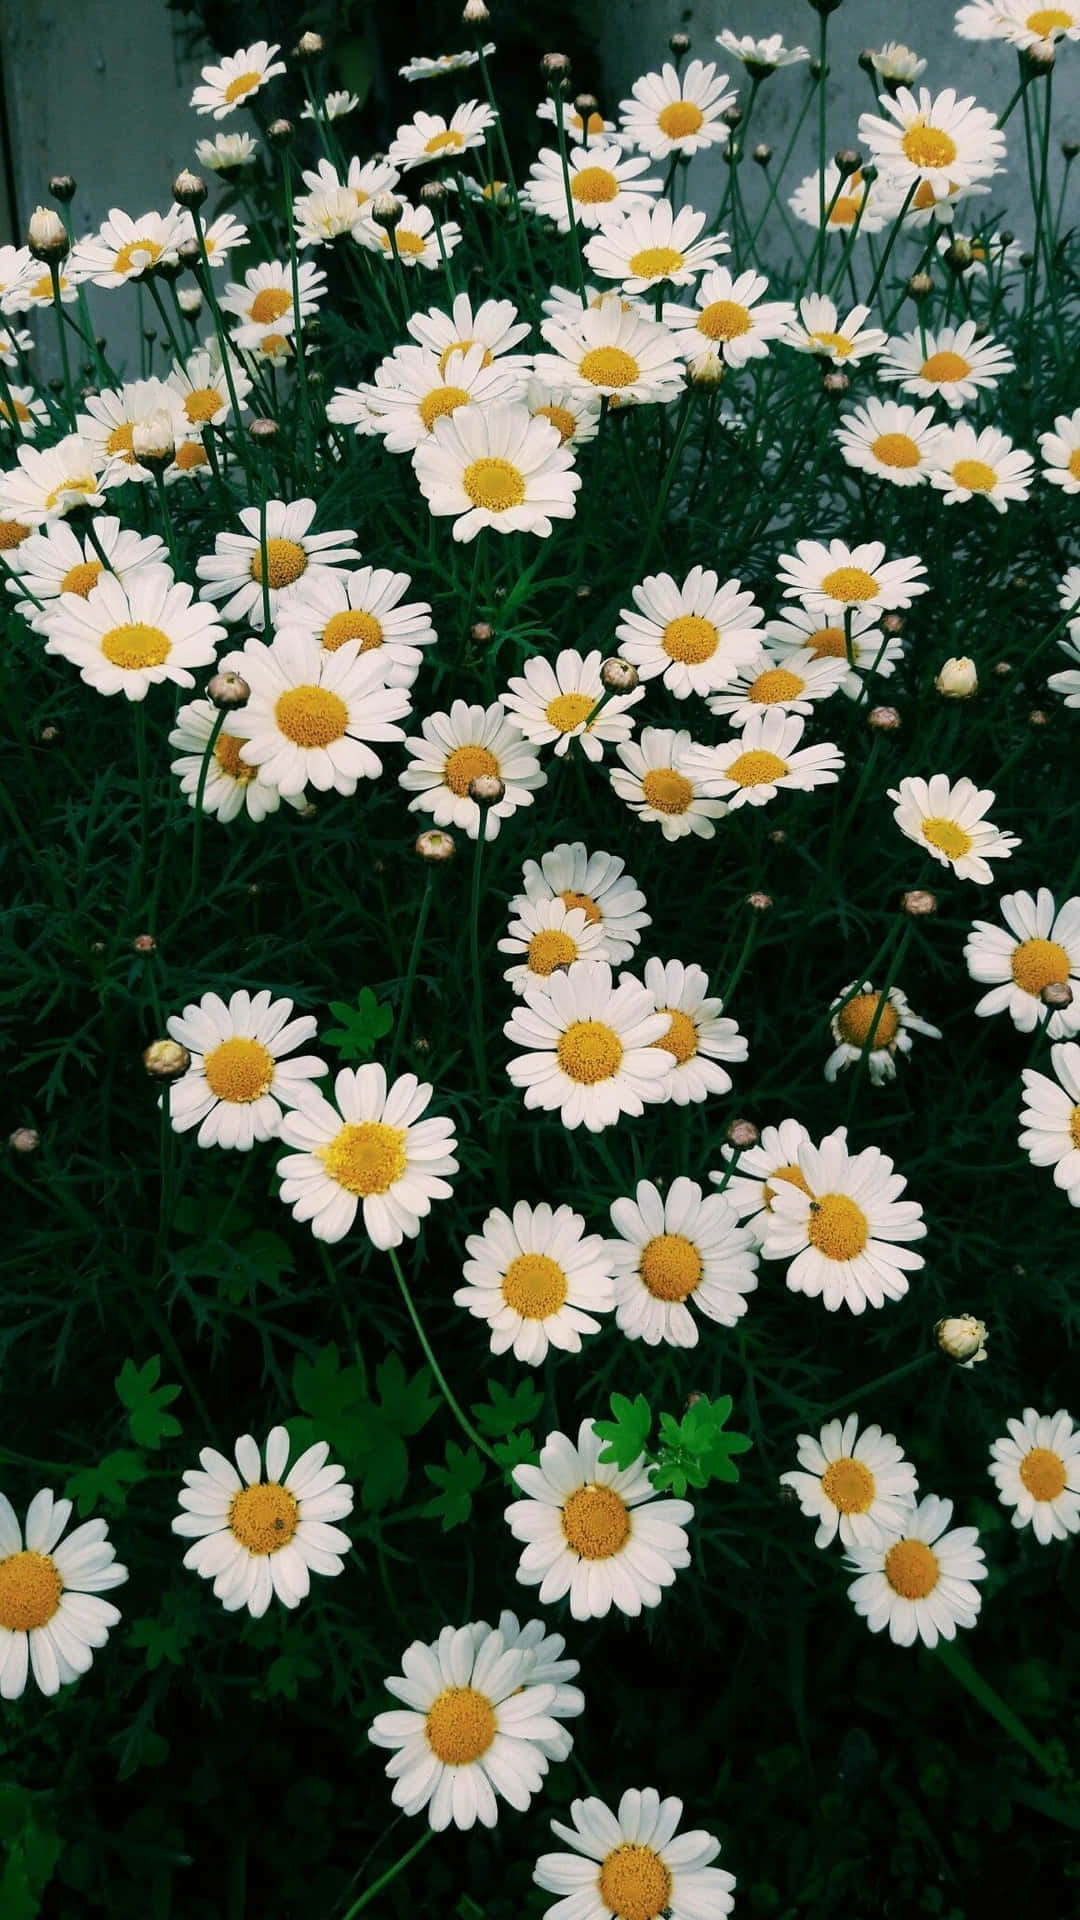 A Daisy in Full Bloom Wallpaper